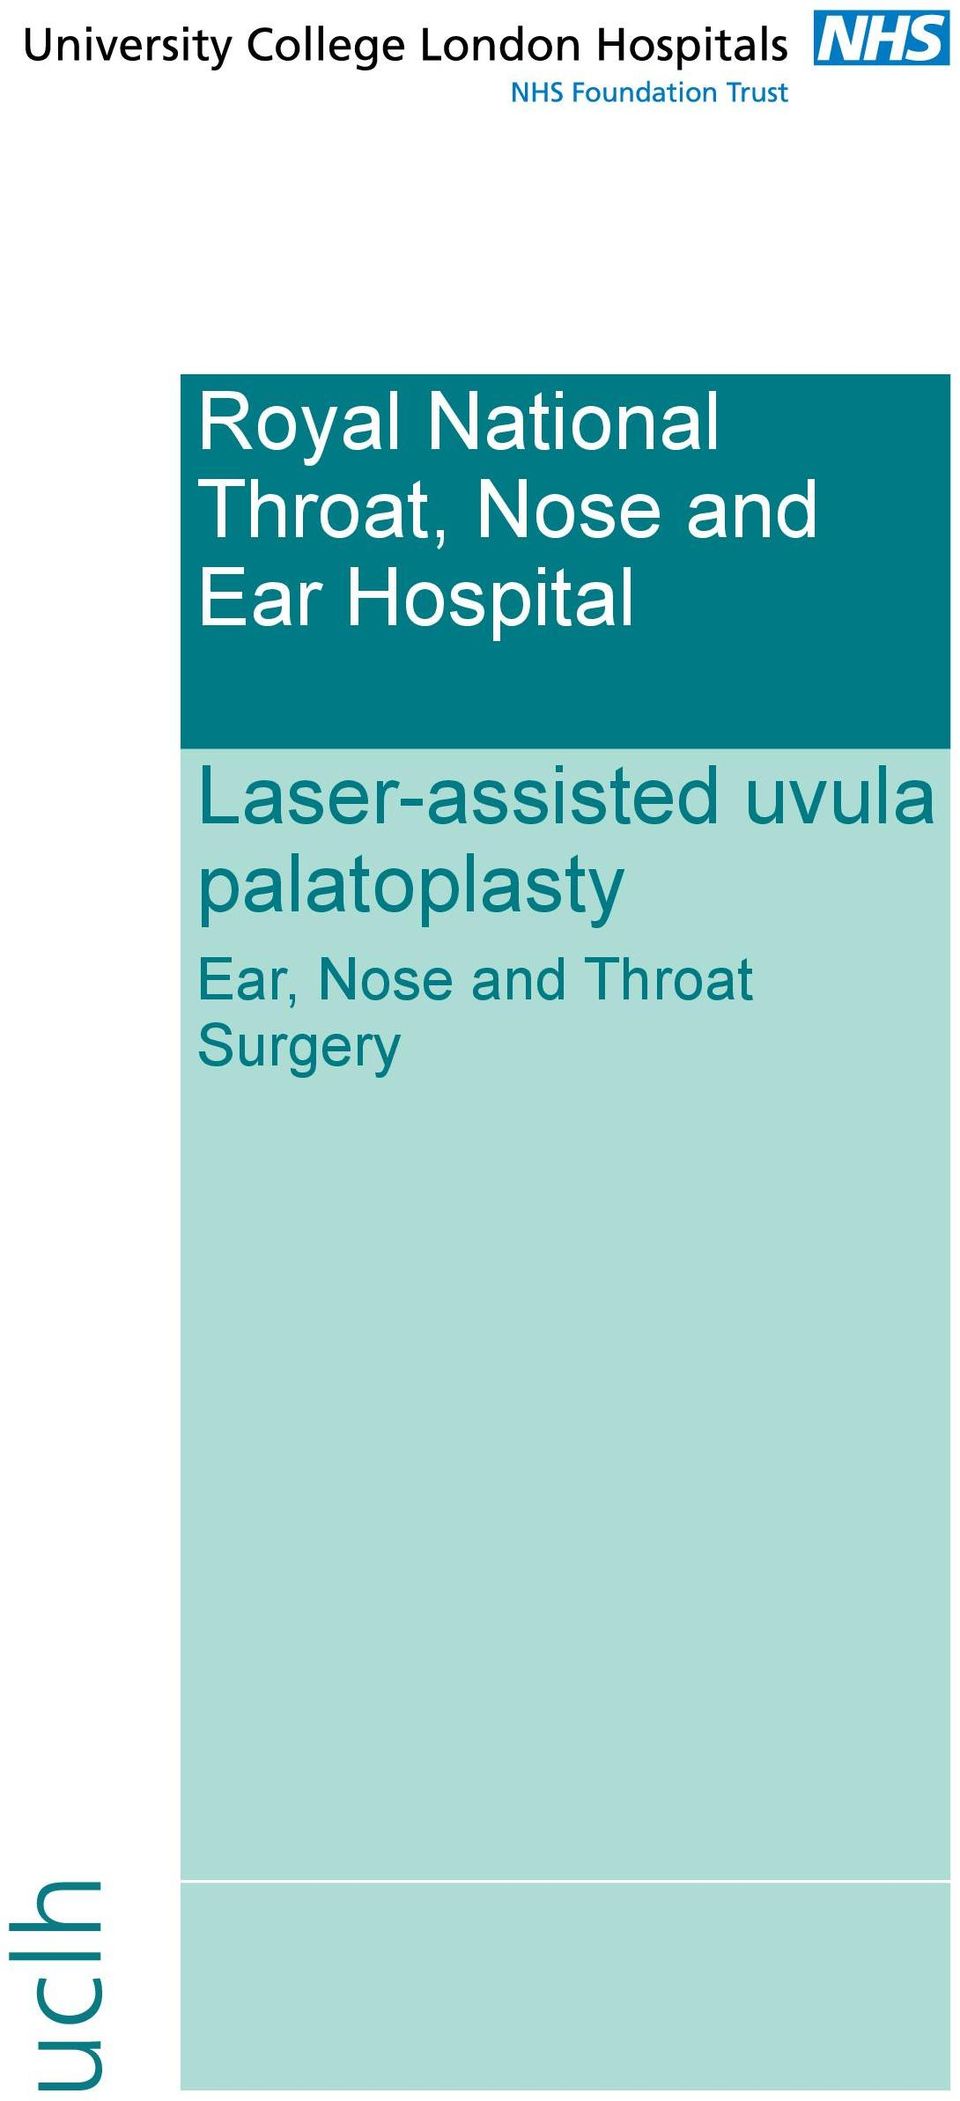 Laser-assisted uvula